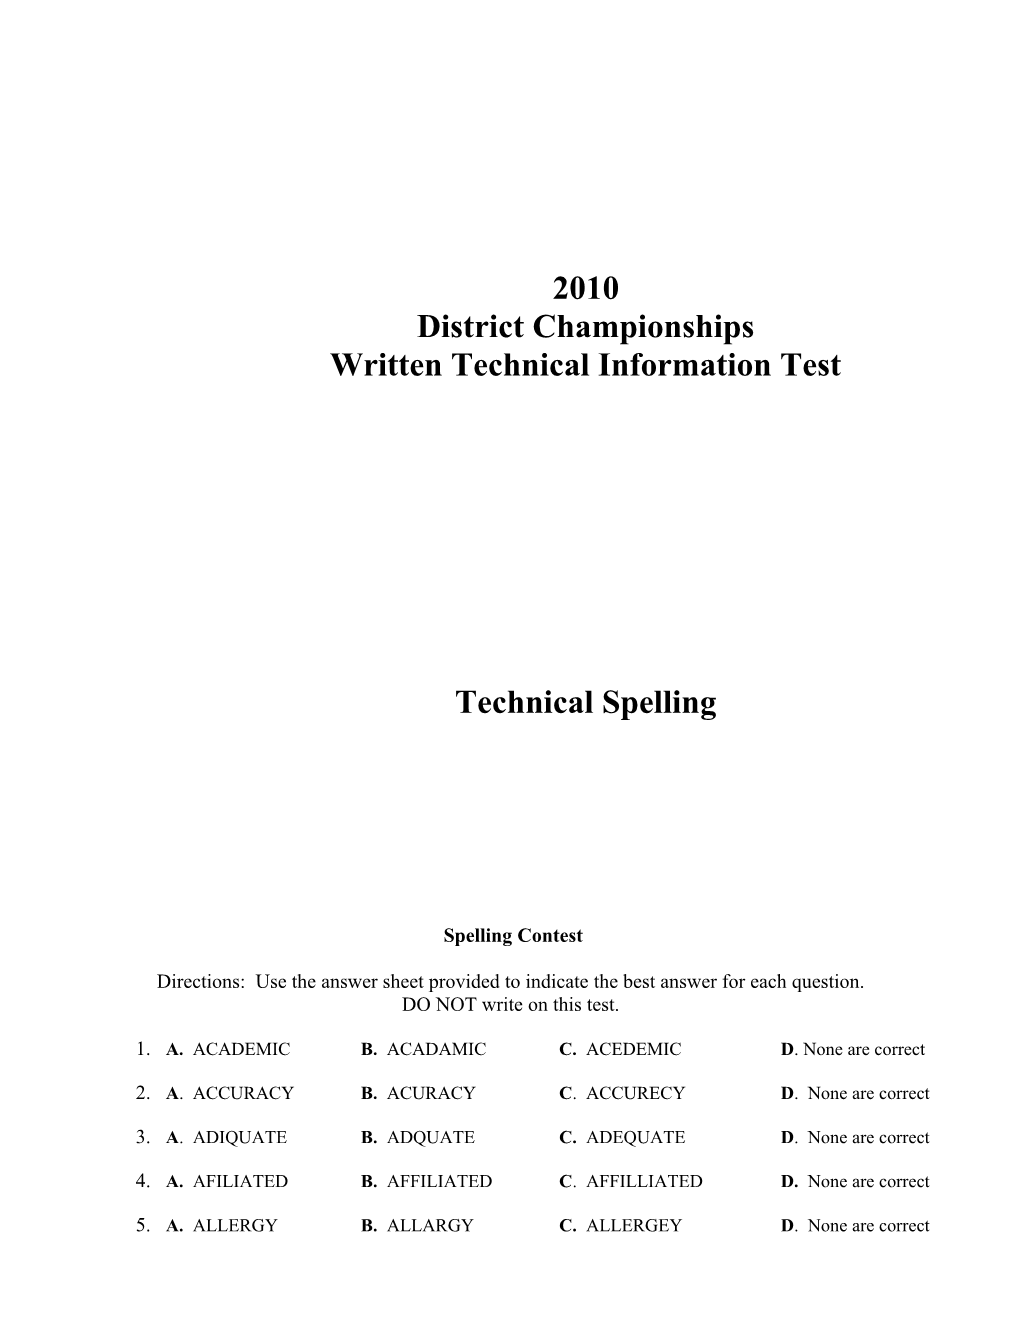 2005 Skillsusa Missouri District Championships Spelling Contest